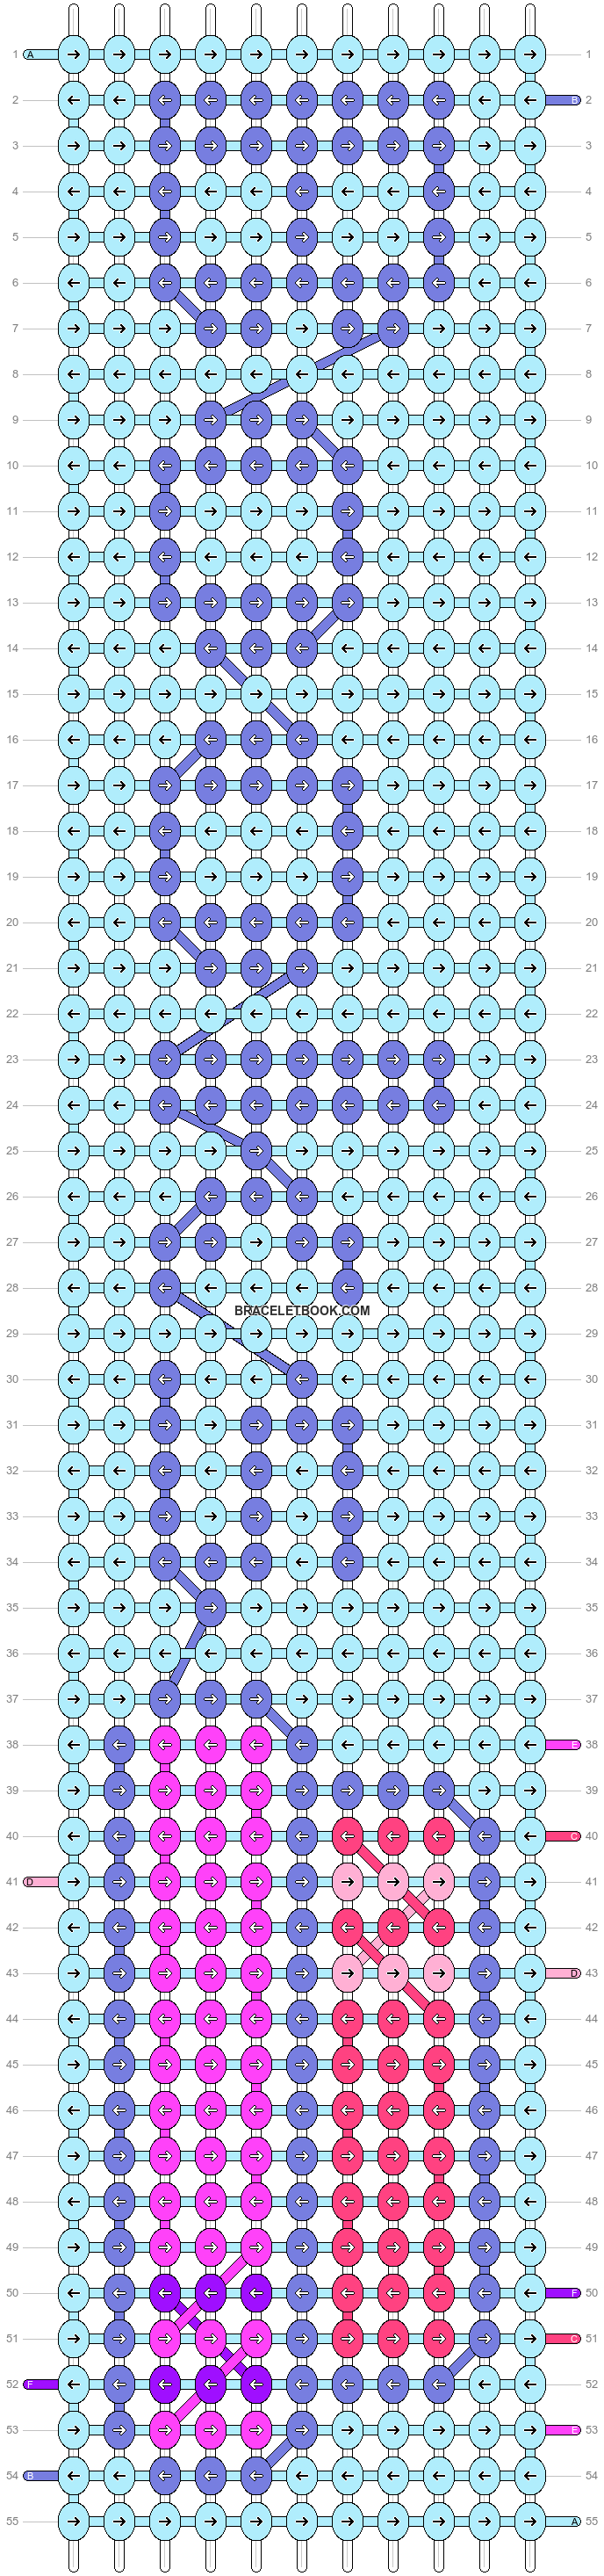 Alpha pattern #88815 variation #160472 pattern